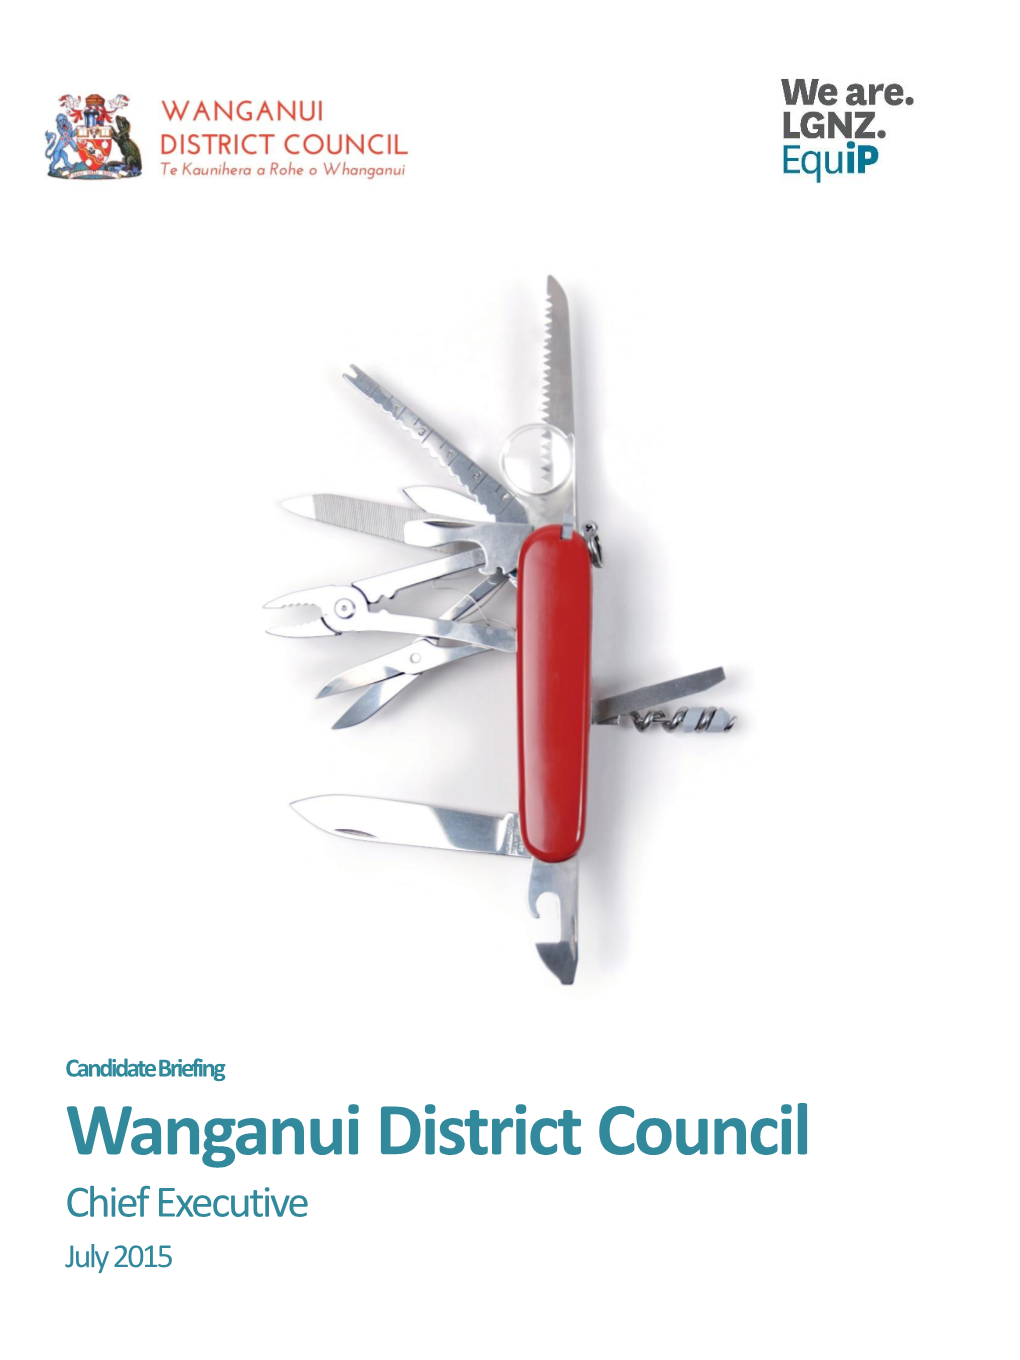 Wanganui District Council Chief Executive